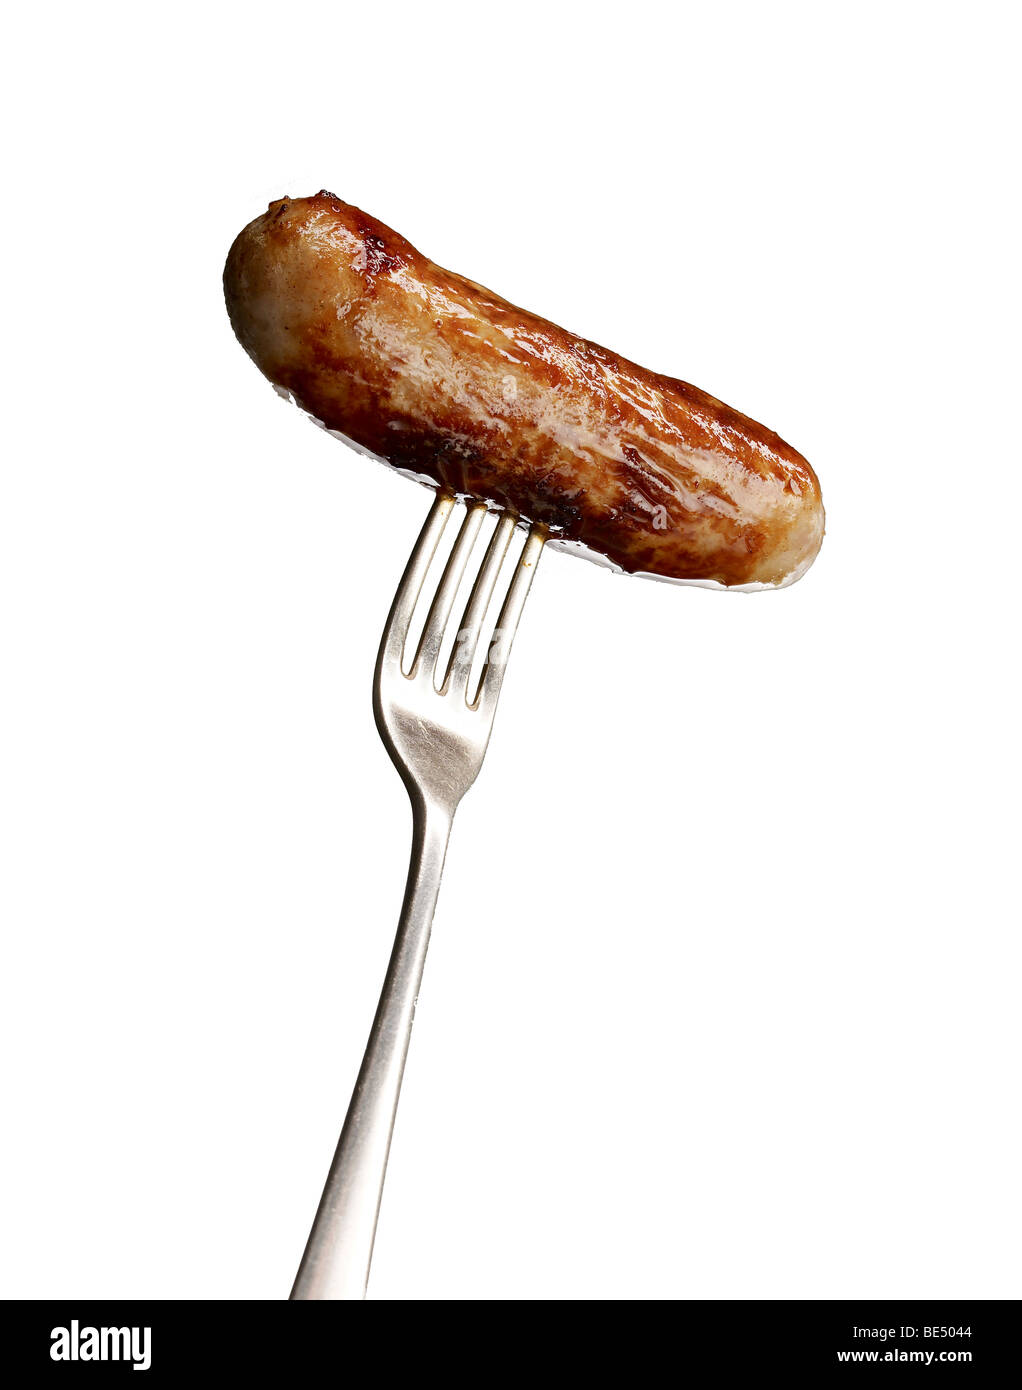 cooked sausage on fork banger snag Stock Photo